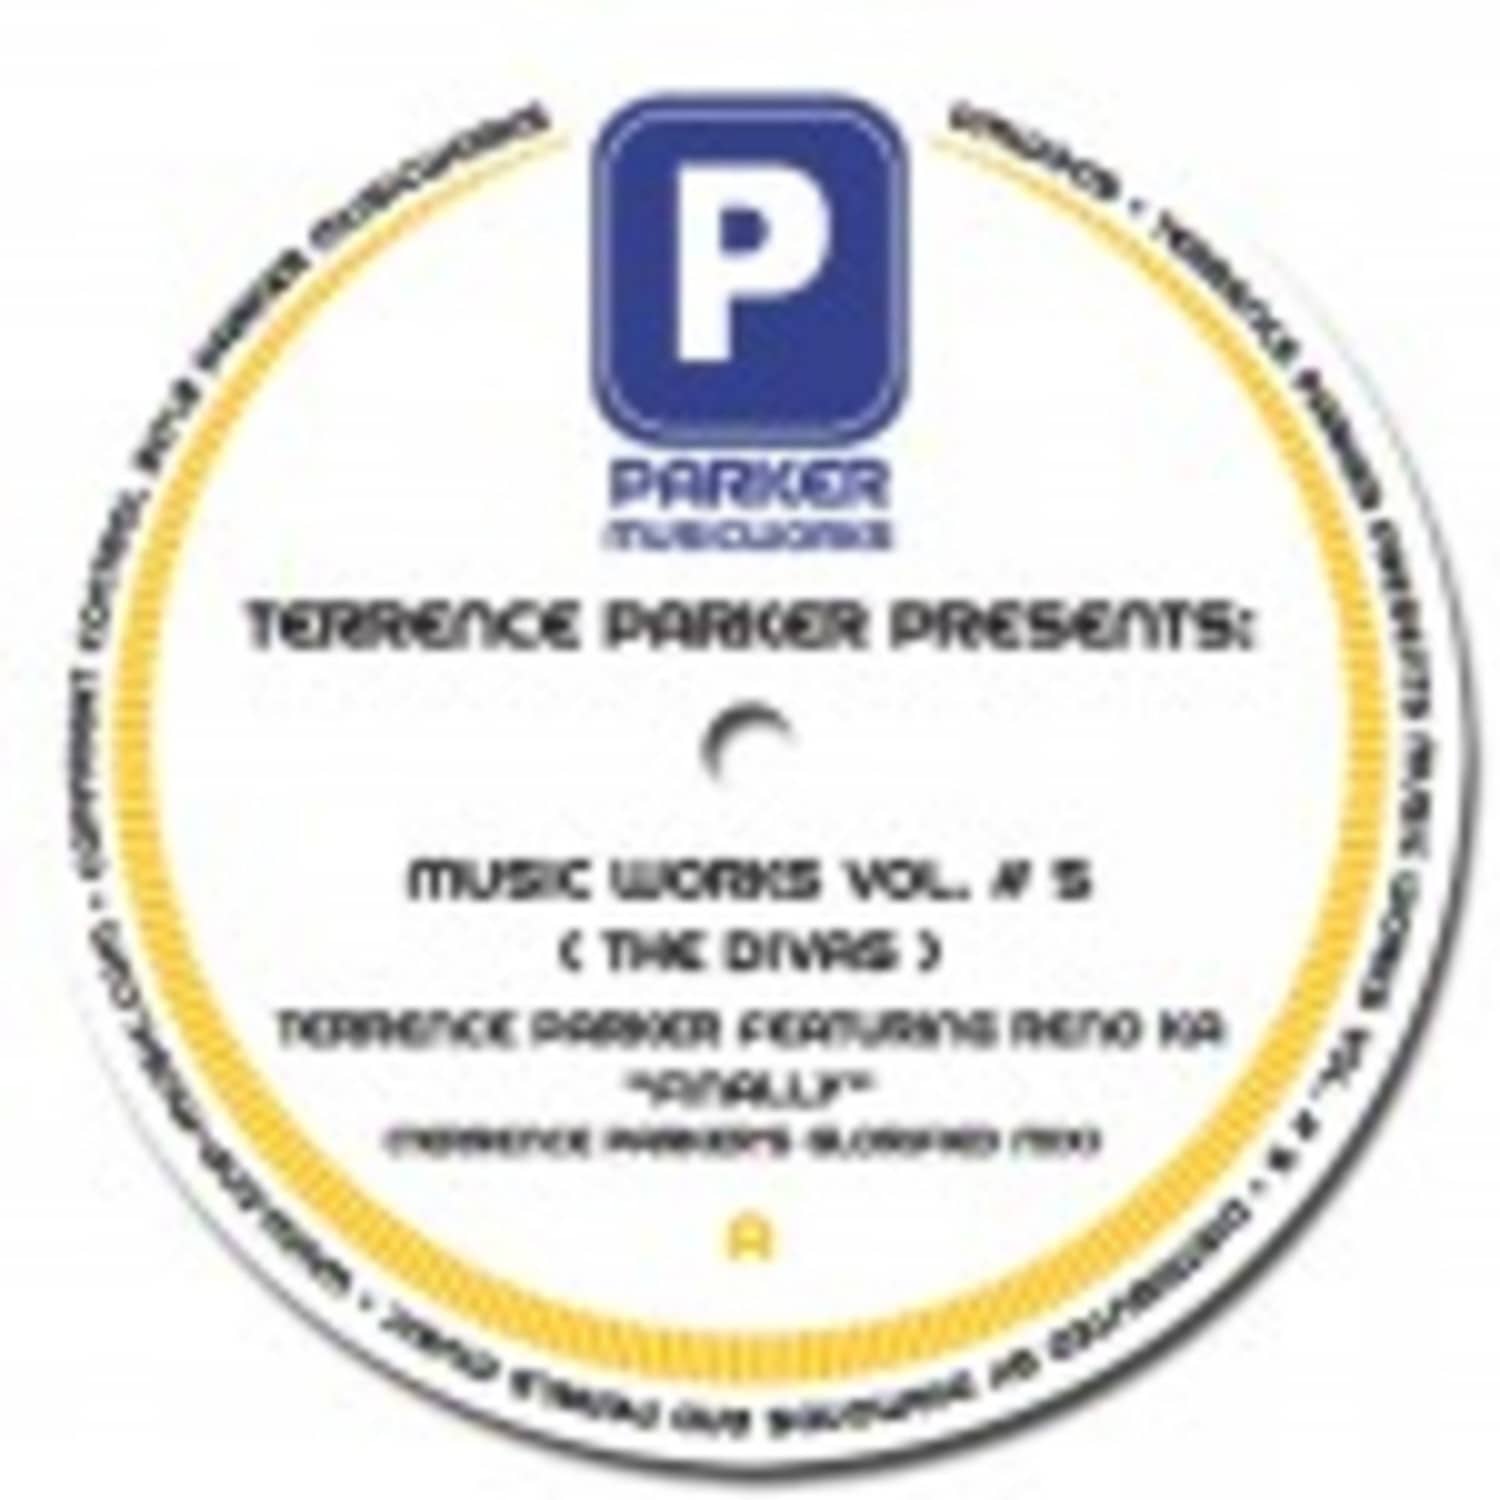 Terrence Parker feat. Reno Ka. / Kelly Gunn - T.PARKER PRESENTS MUSIC WORKS VOL.5 - THE DIVAS